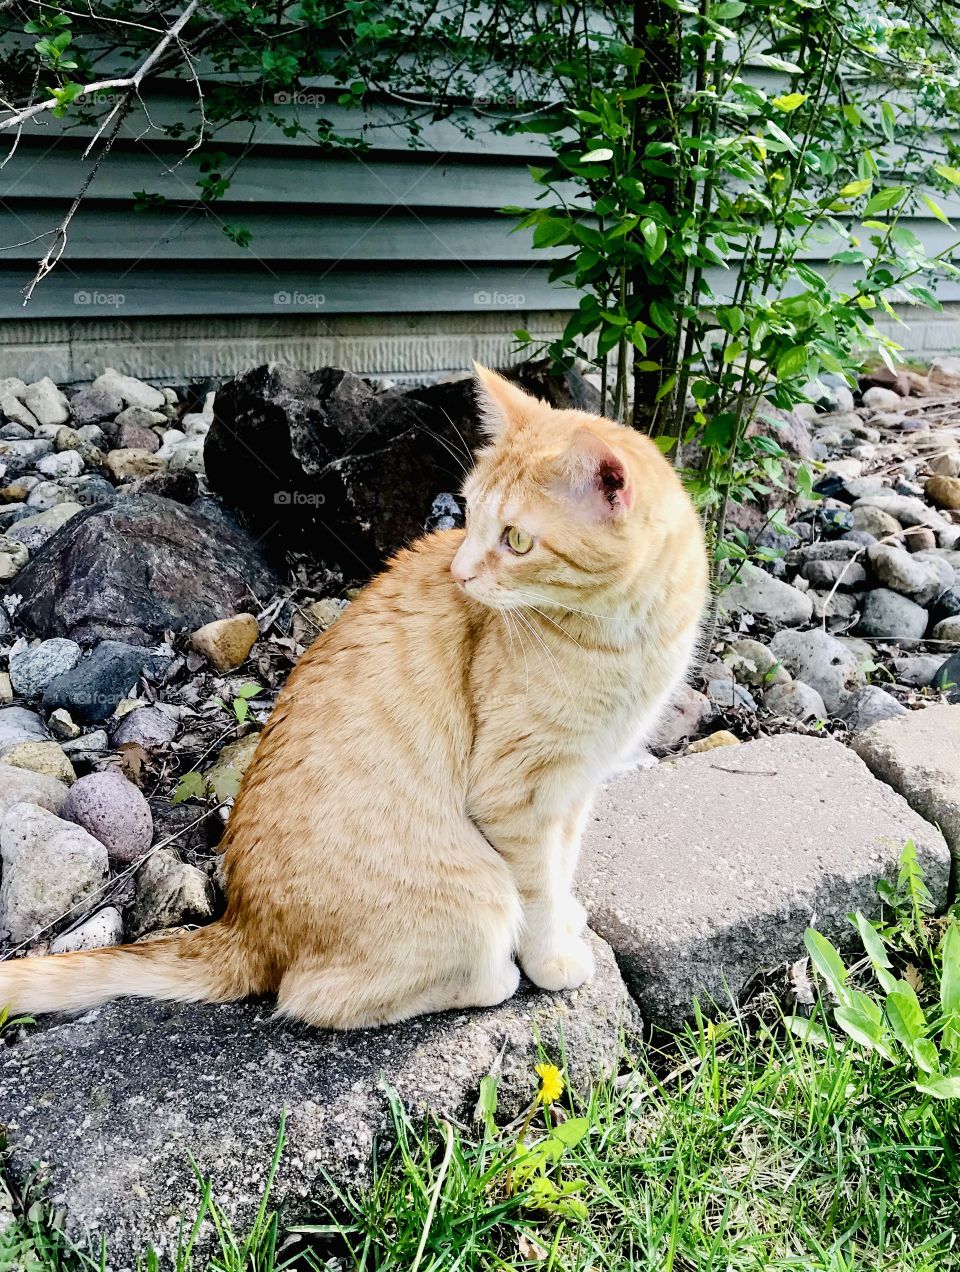 Darling orange tabby cat enjoying exploring all around outside in yard on beautiful day! 